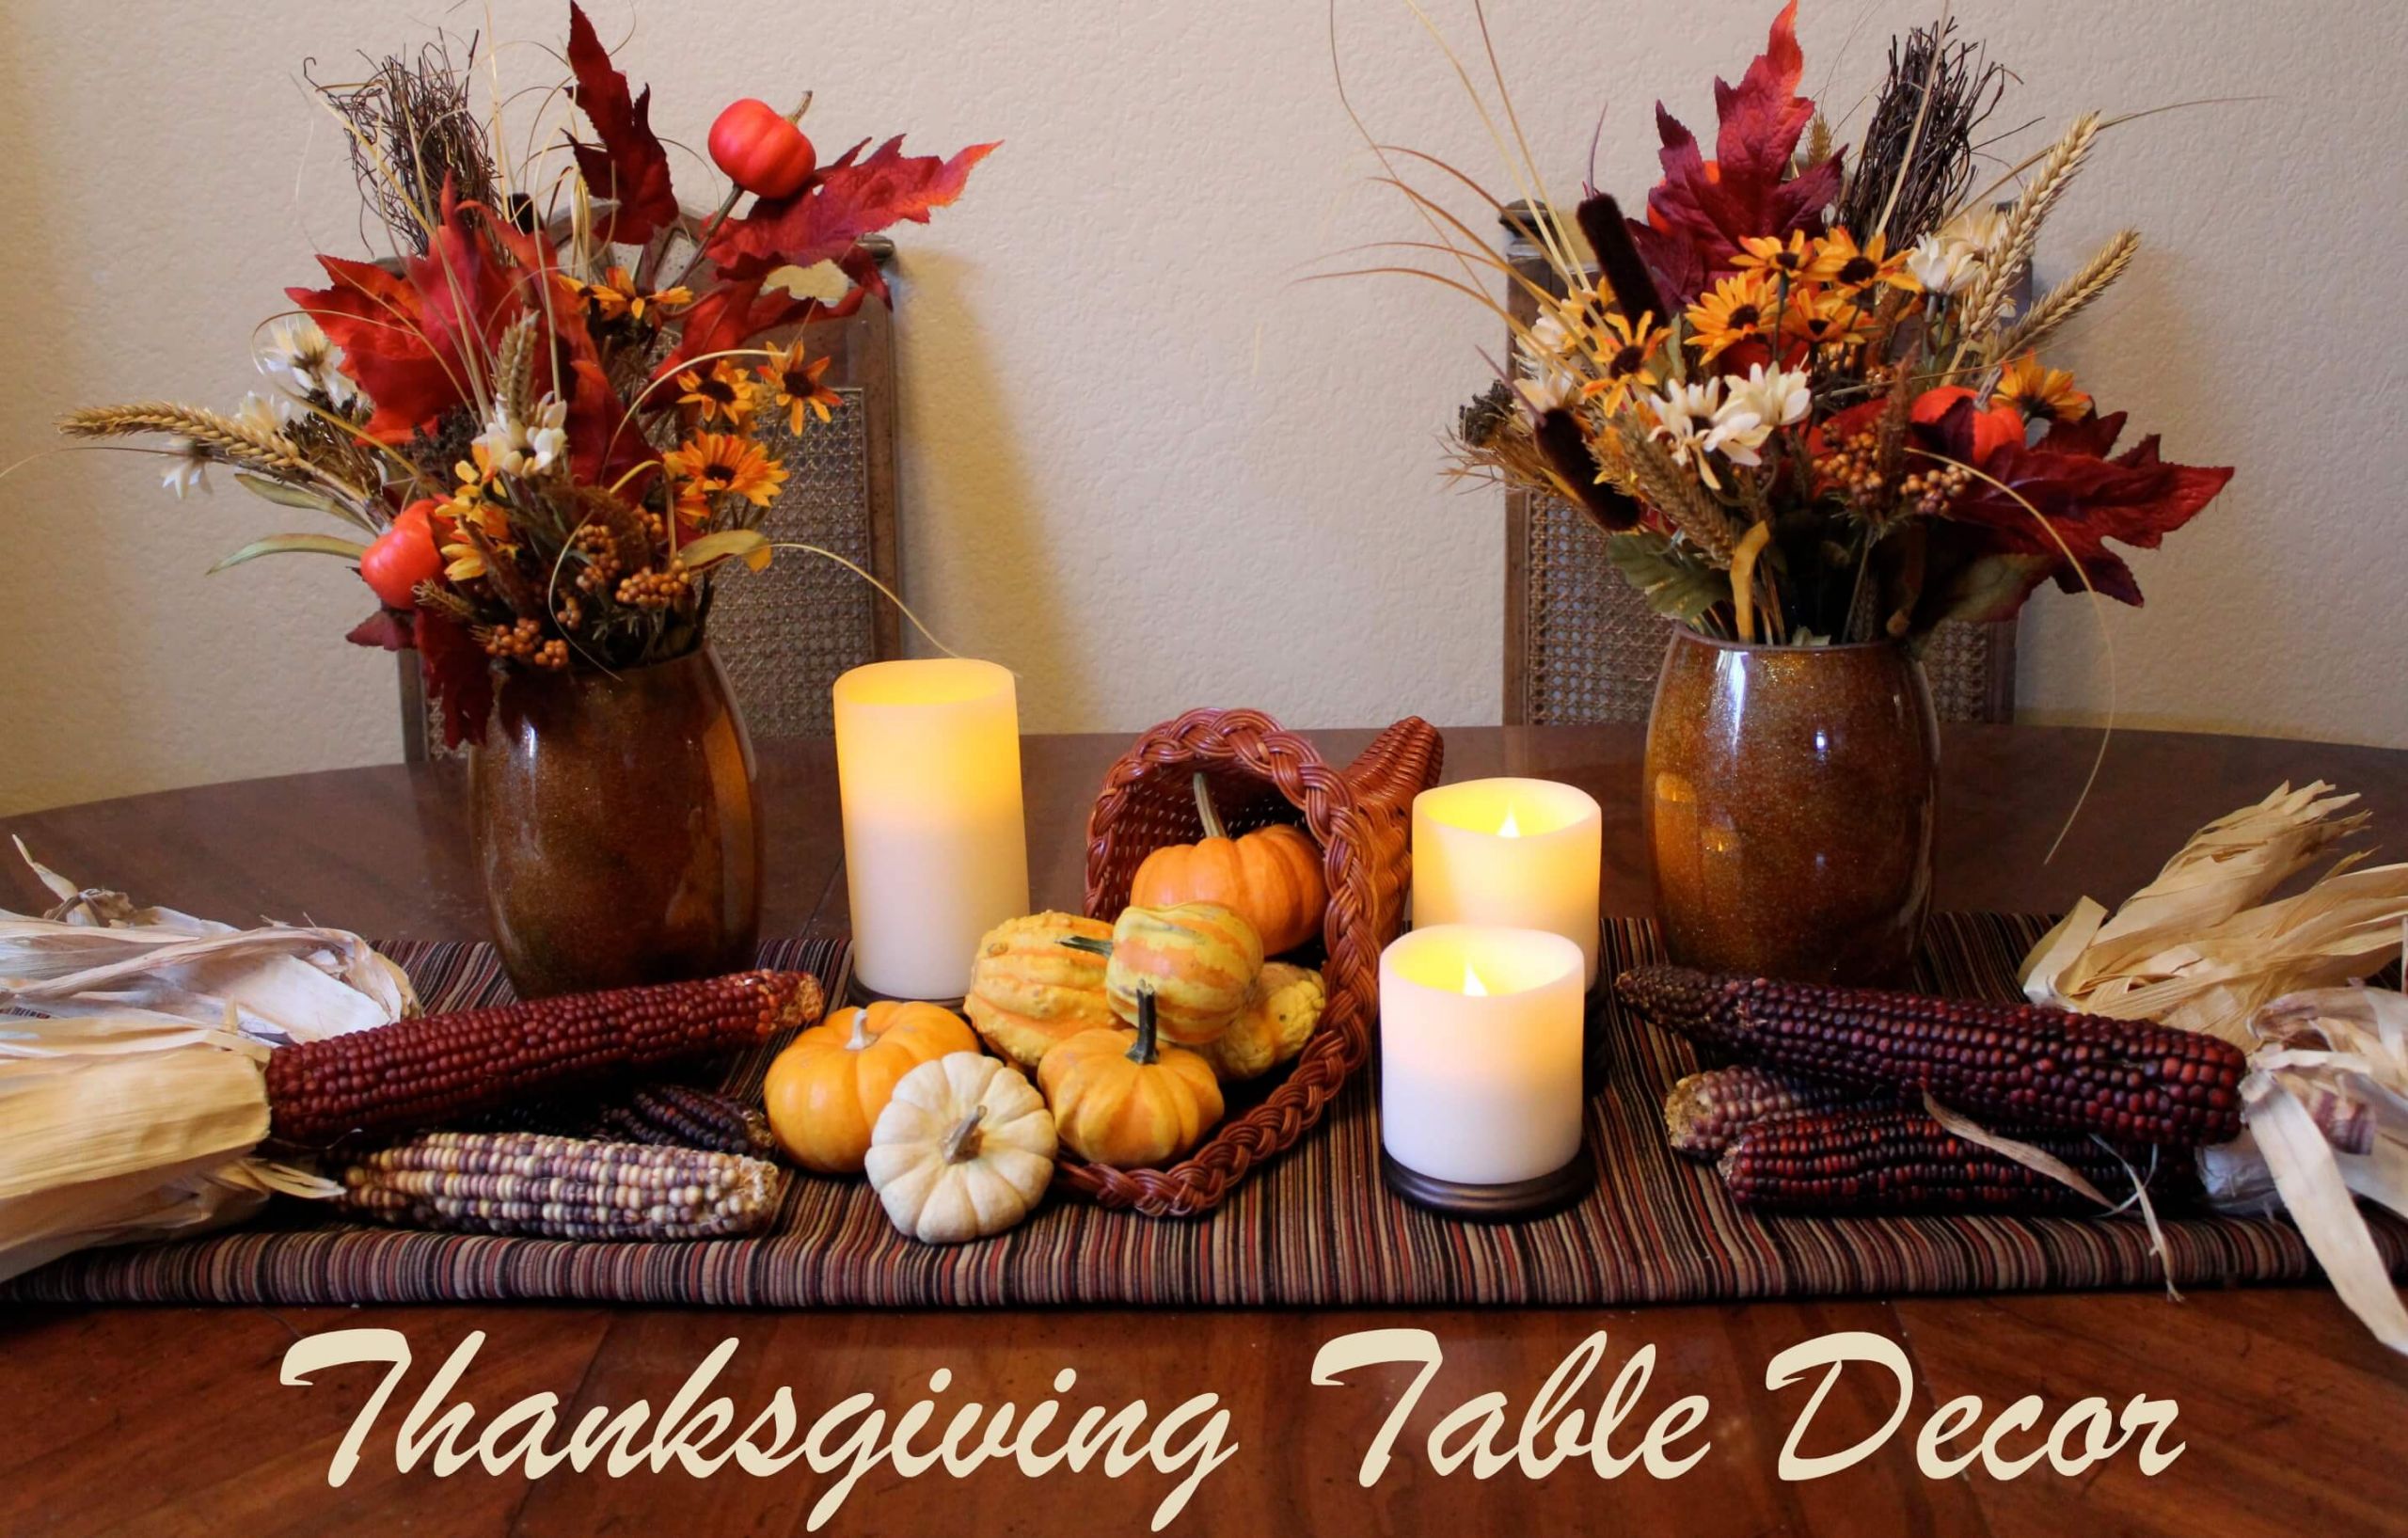 DIY Thanksgiving Decorations Ideas
 Magnificent DIY Thanksgiving Decorations Ideas You Can Use